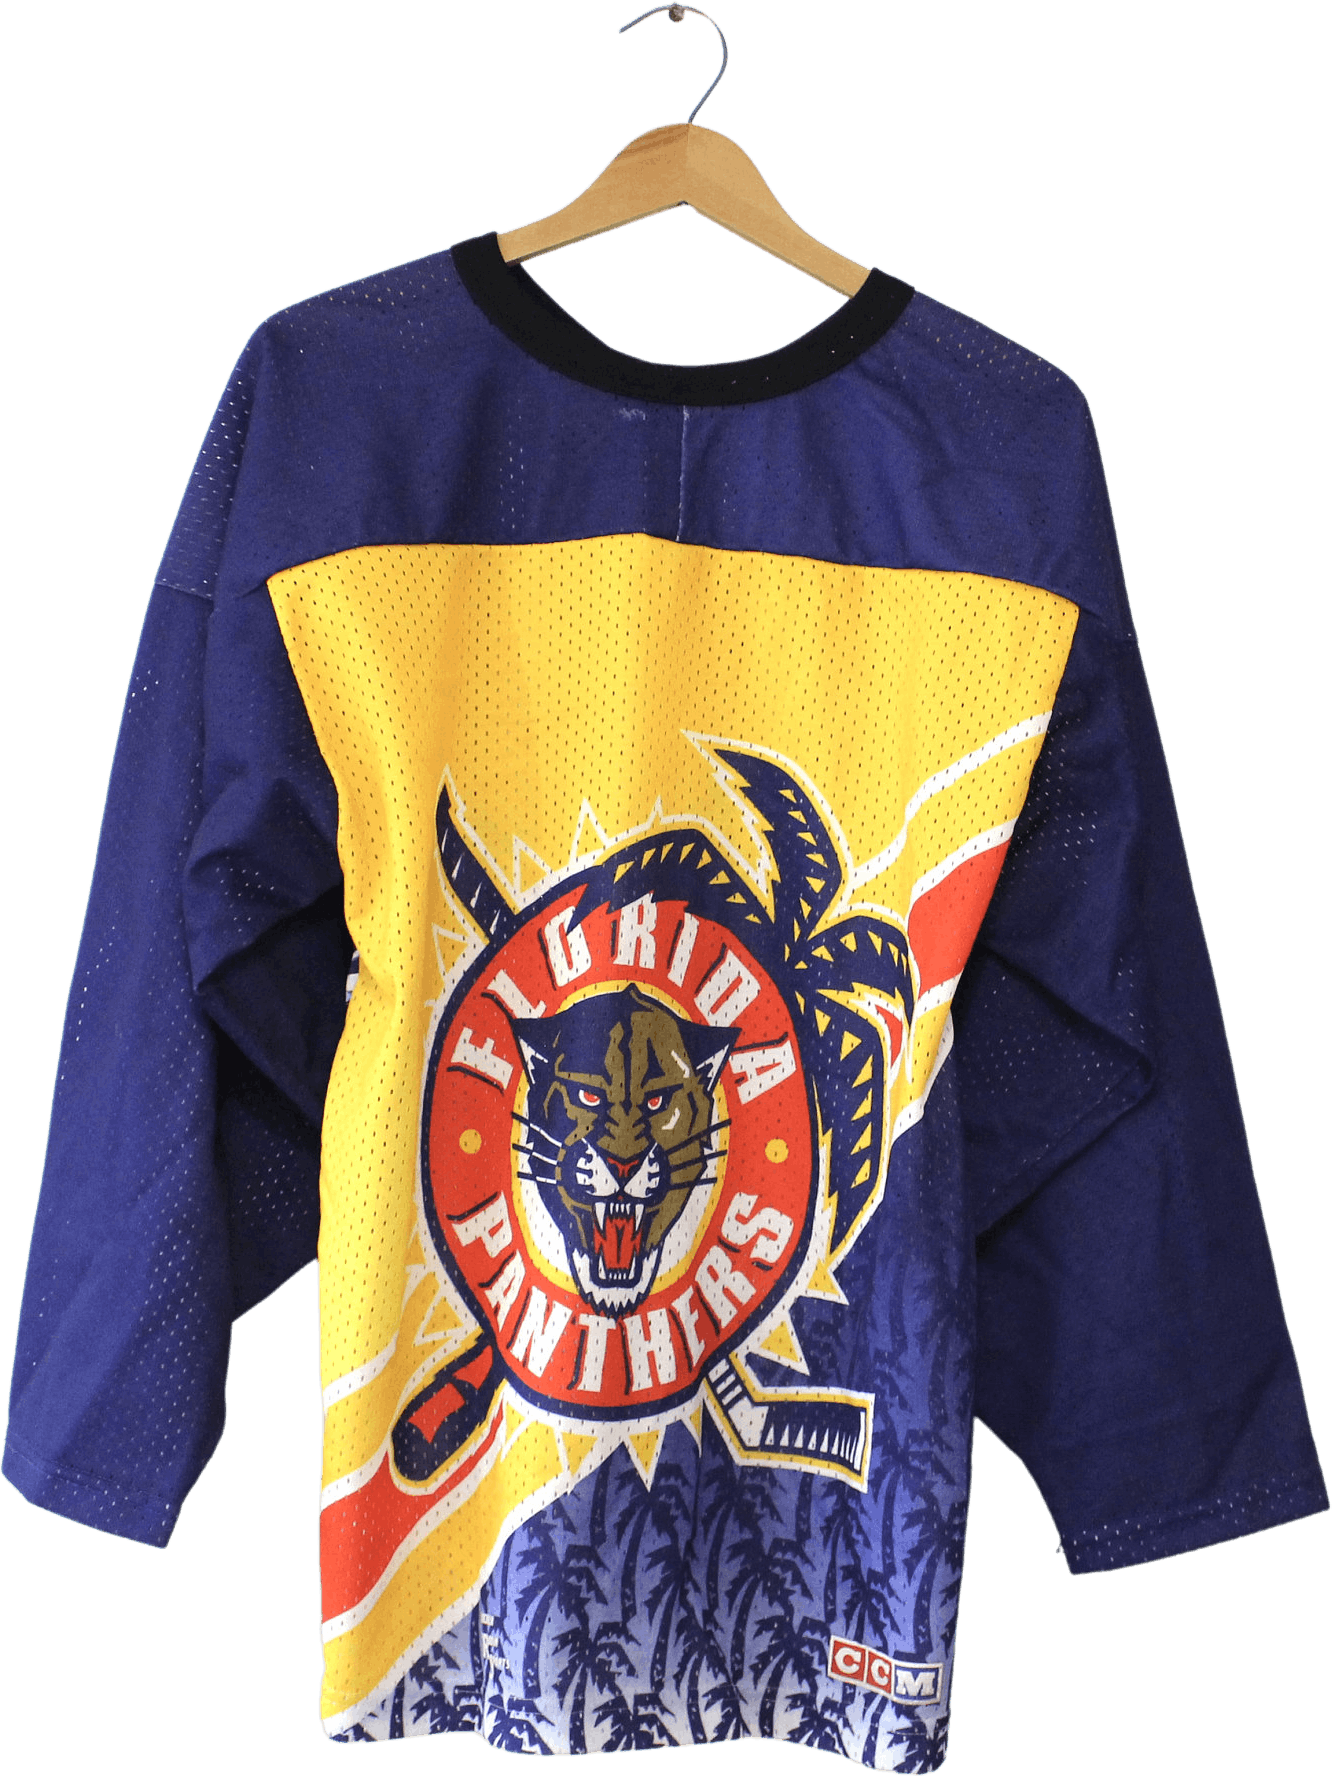 Vintage Florida Panthers Hockey Jersey by CCM